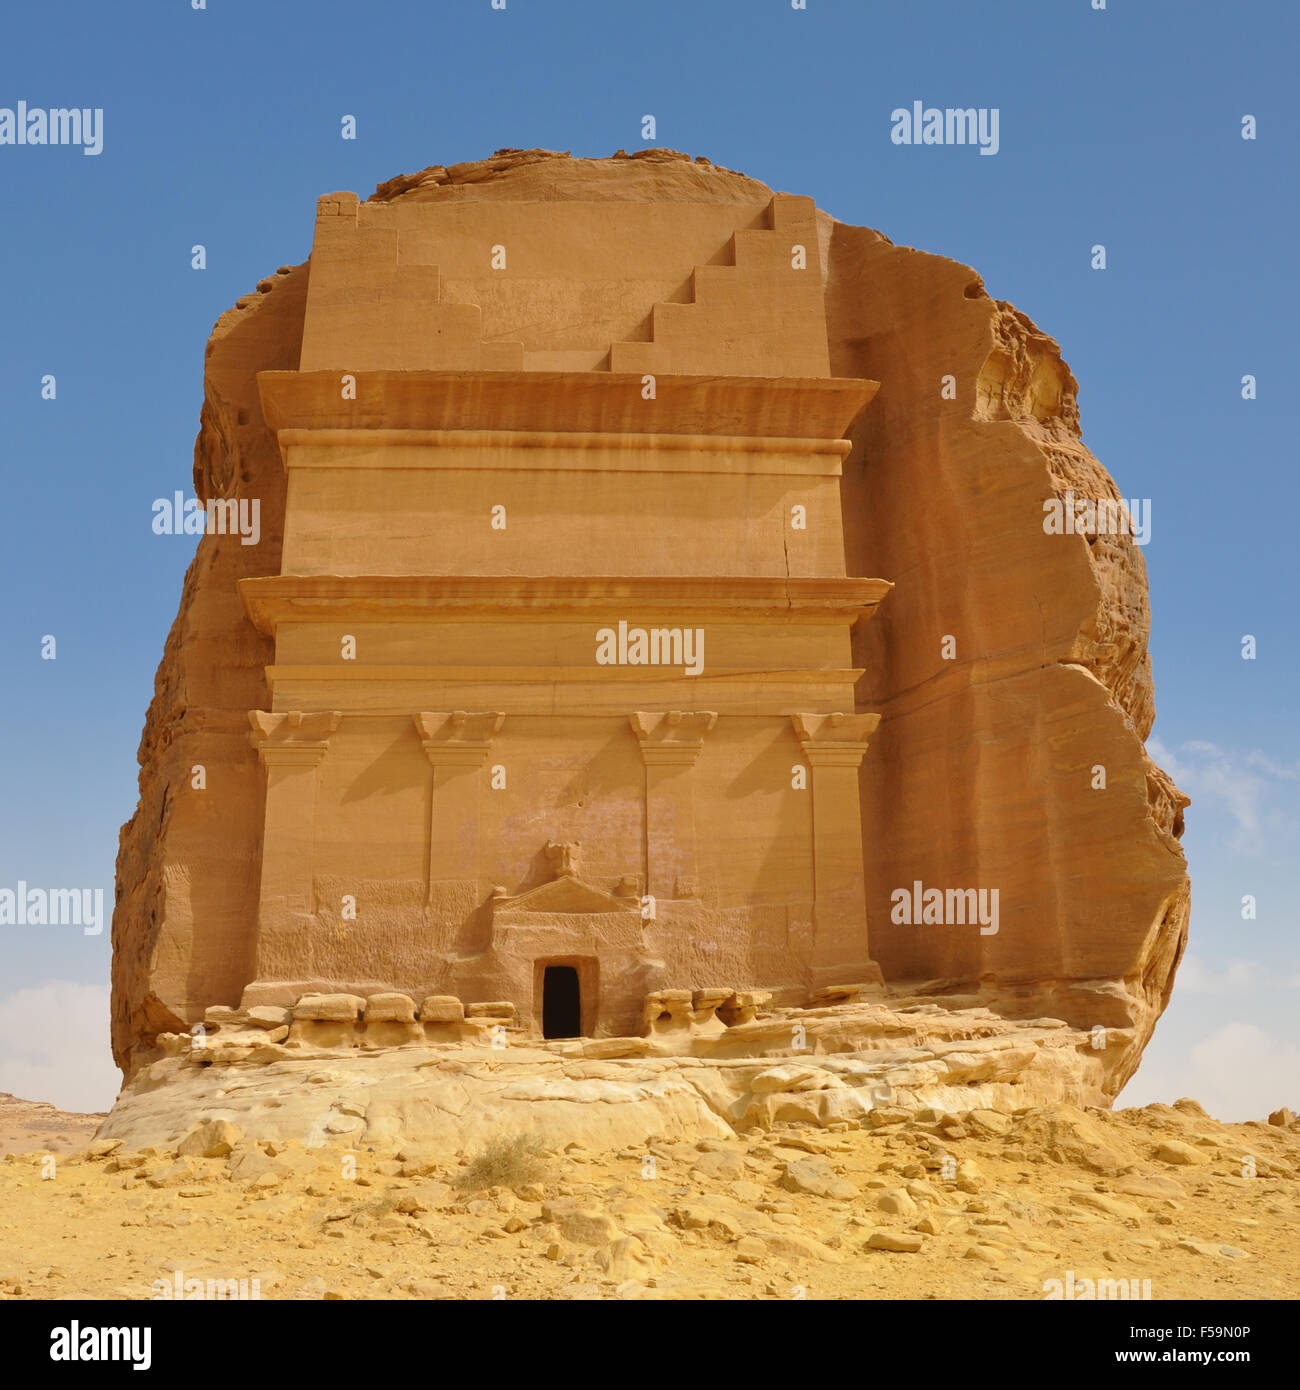 Qasr al Farid, biggest tomb in Archeological site Mada'in Saleh, saudi arabia Stock Photo